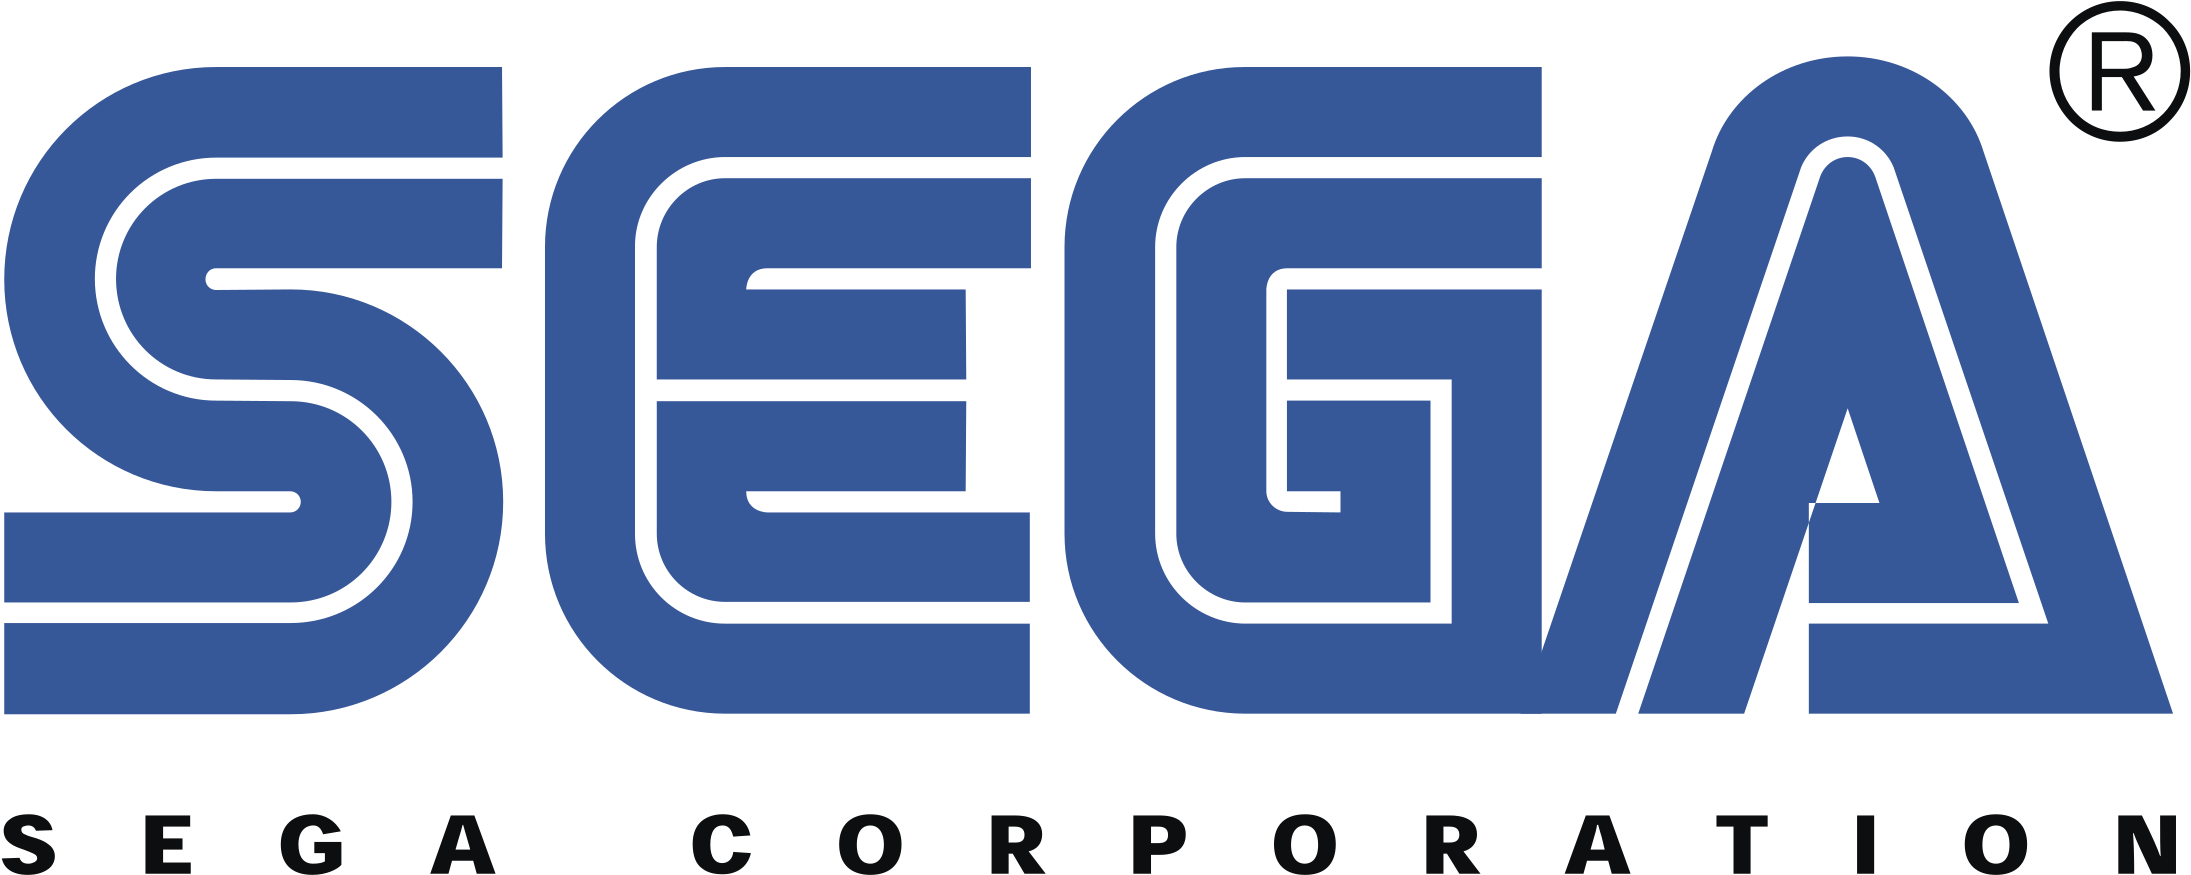 Sega Logo PNG - 176054